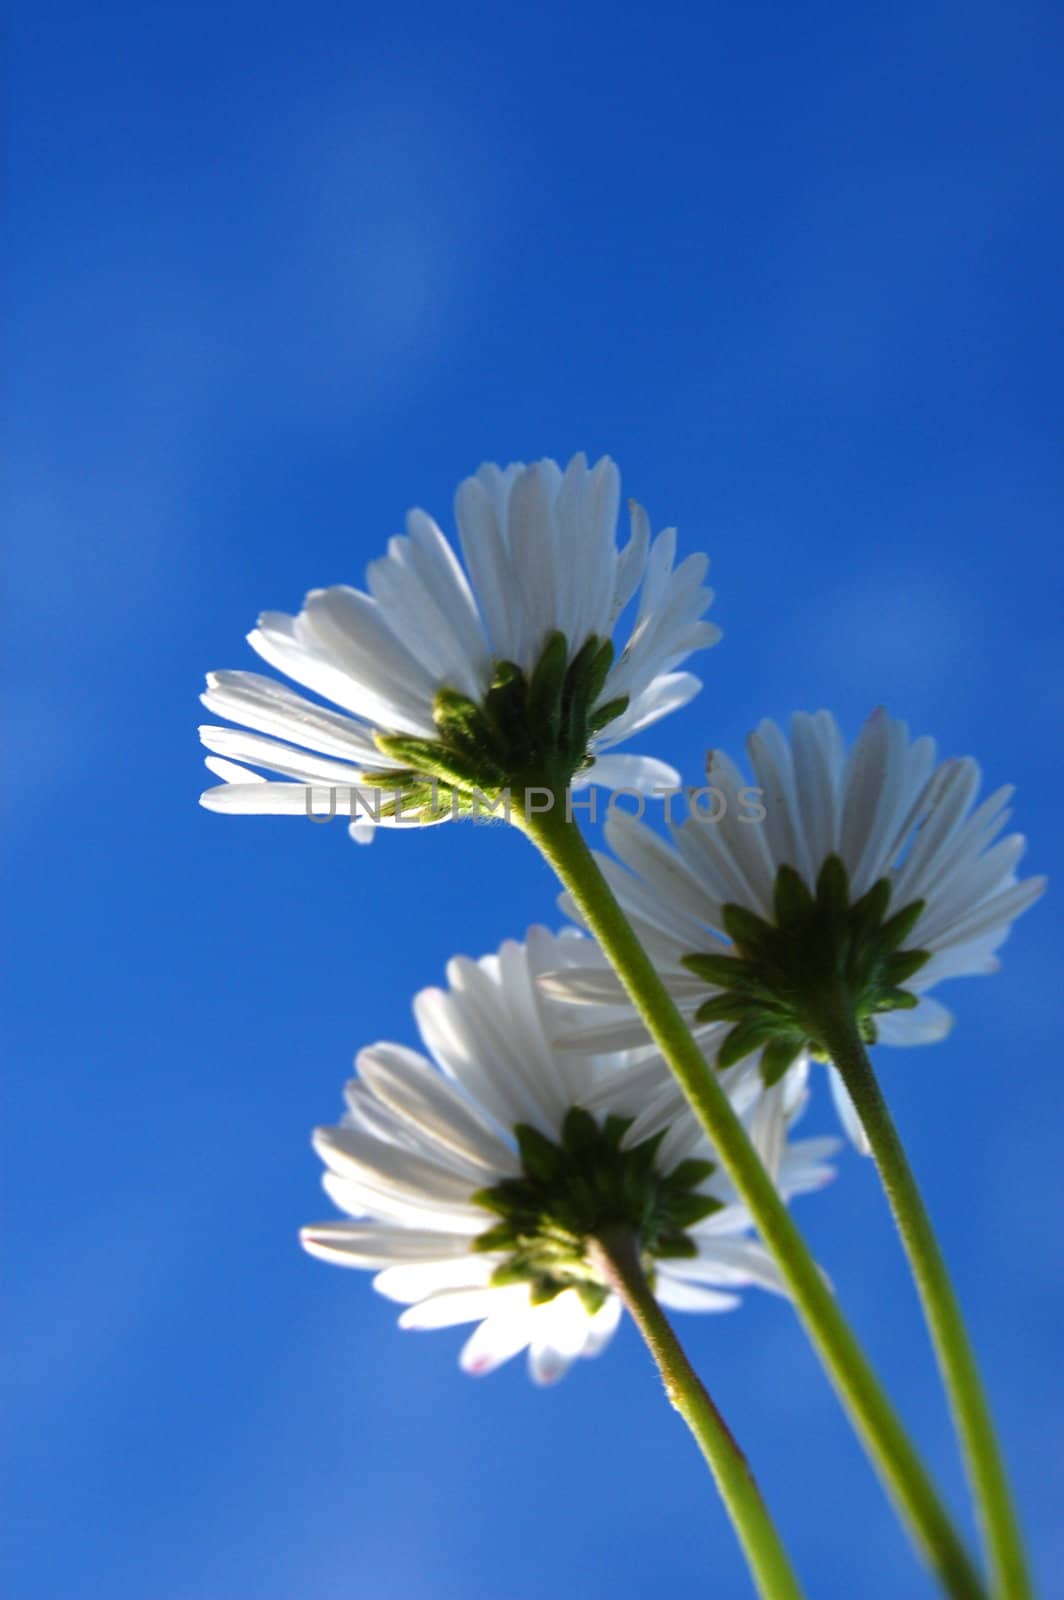 daisy under blue sky by gunnar3000